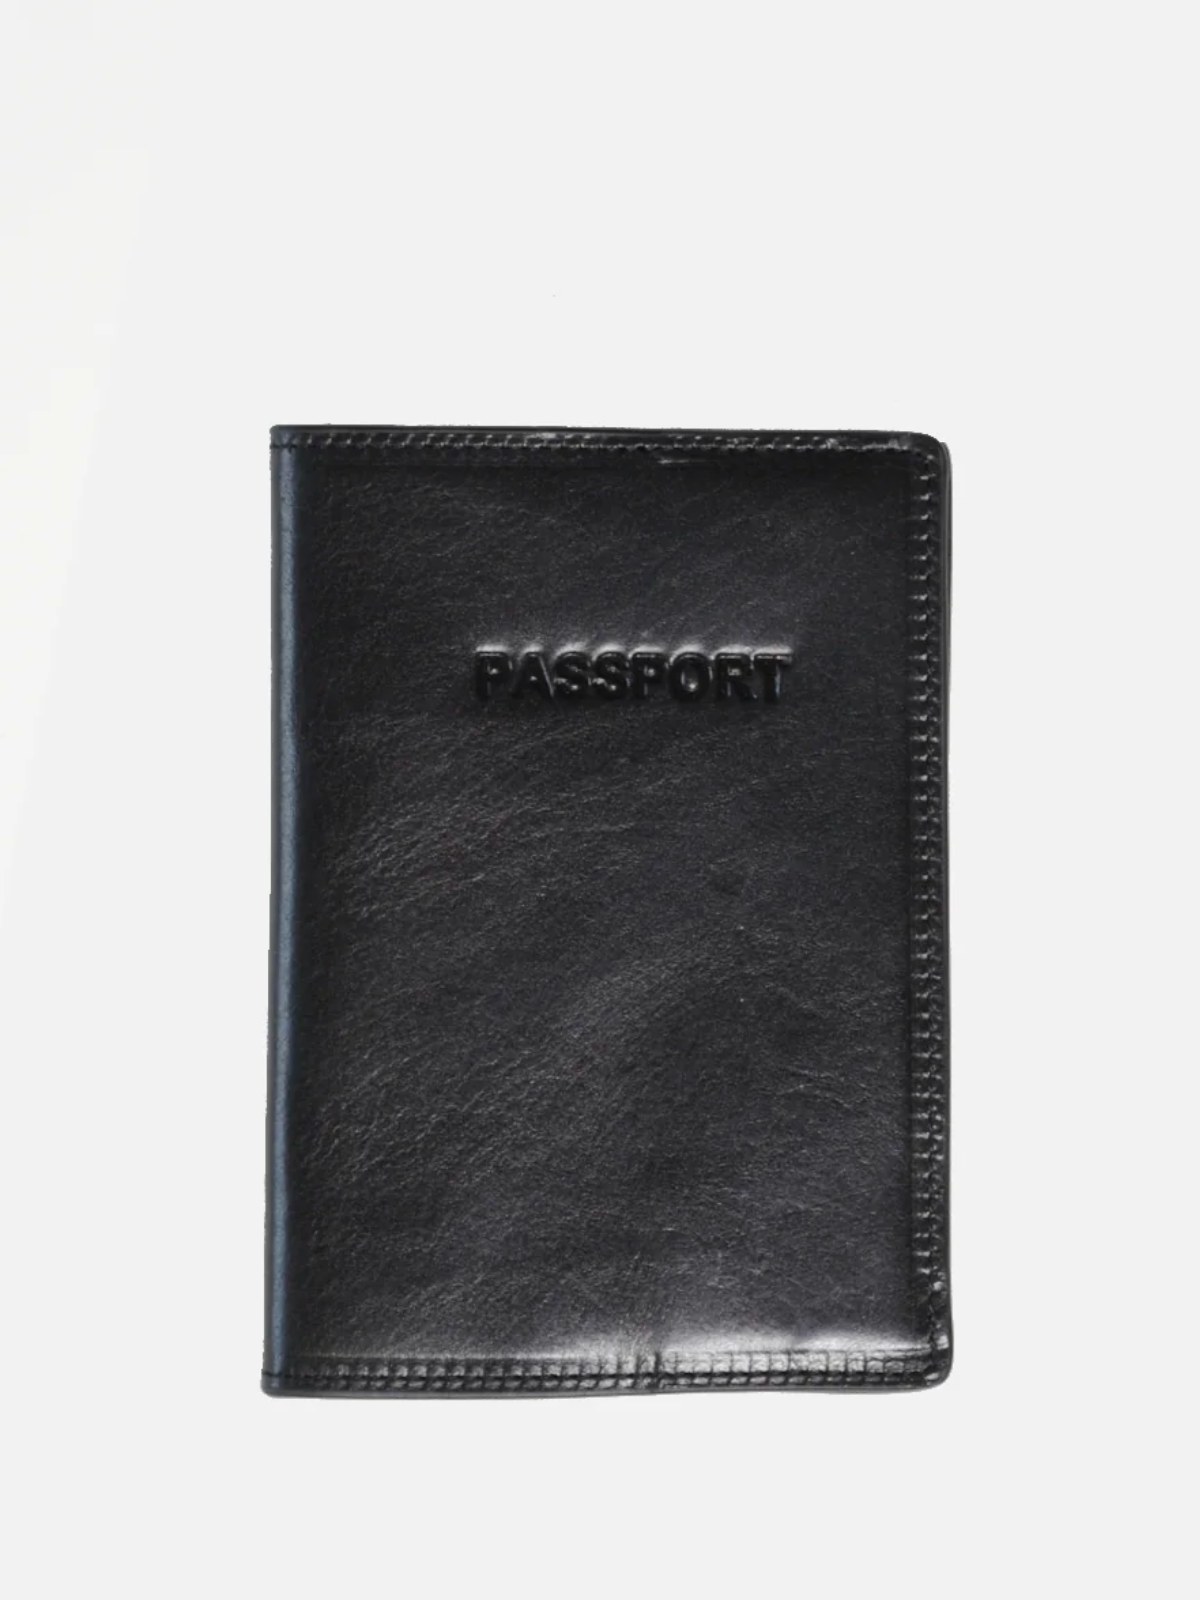 curated basics italian leather passport sleeve black suede interior kempt athens ga georgia men's clothing store